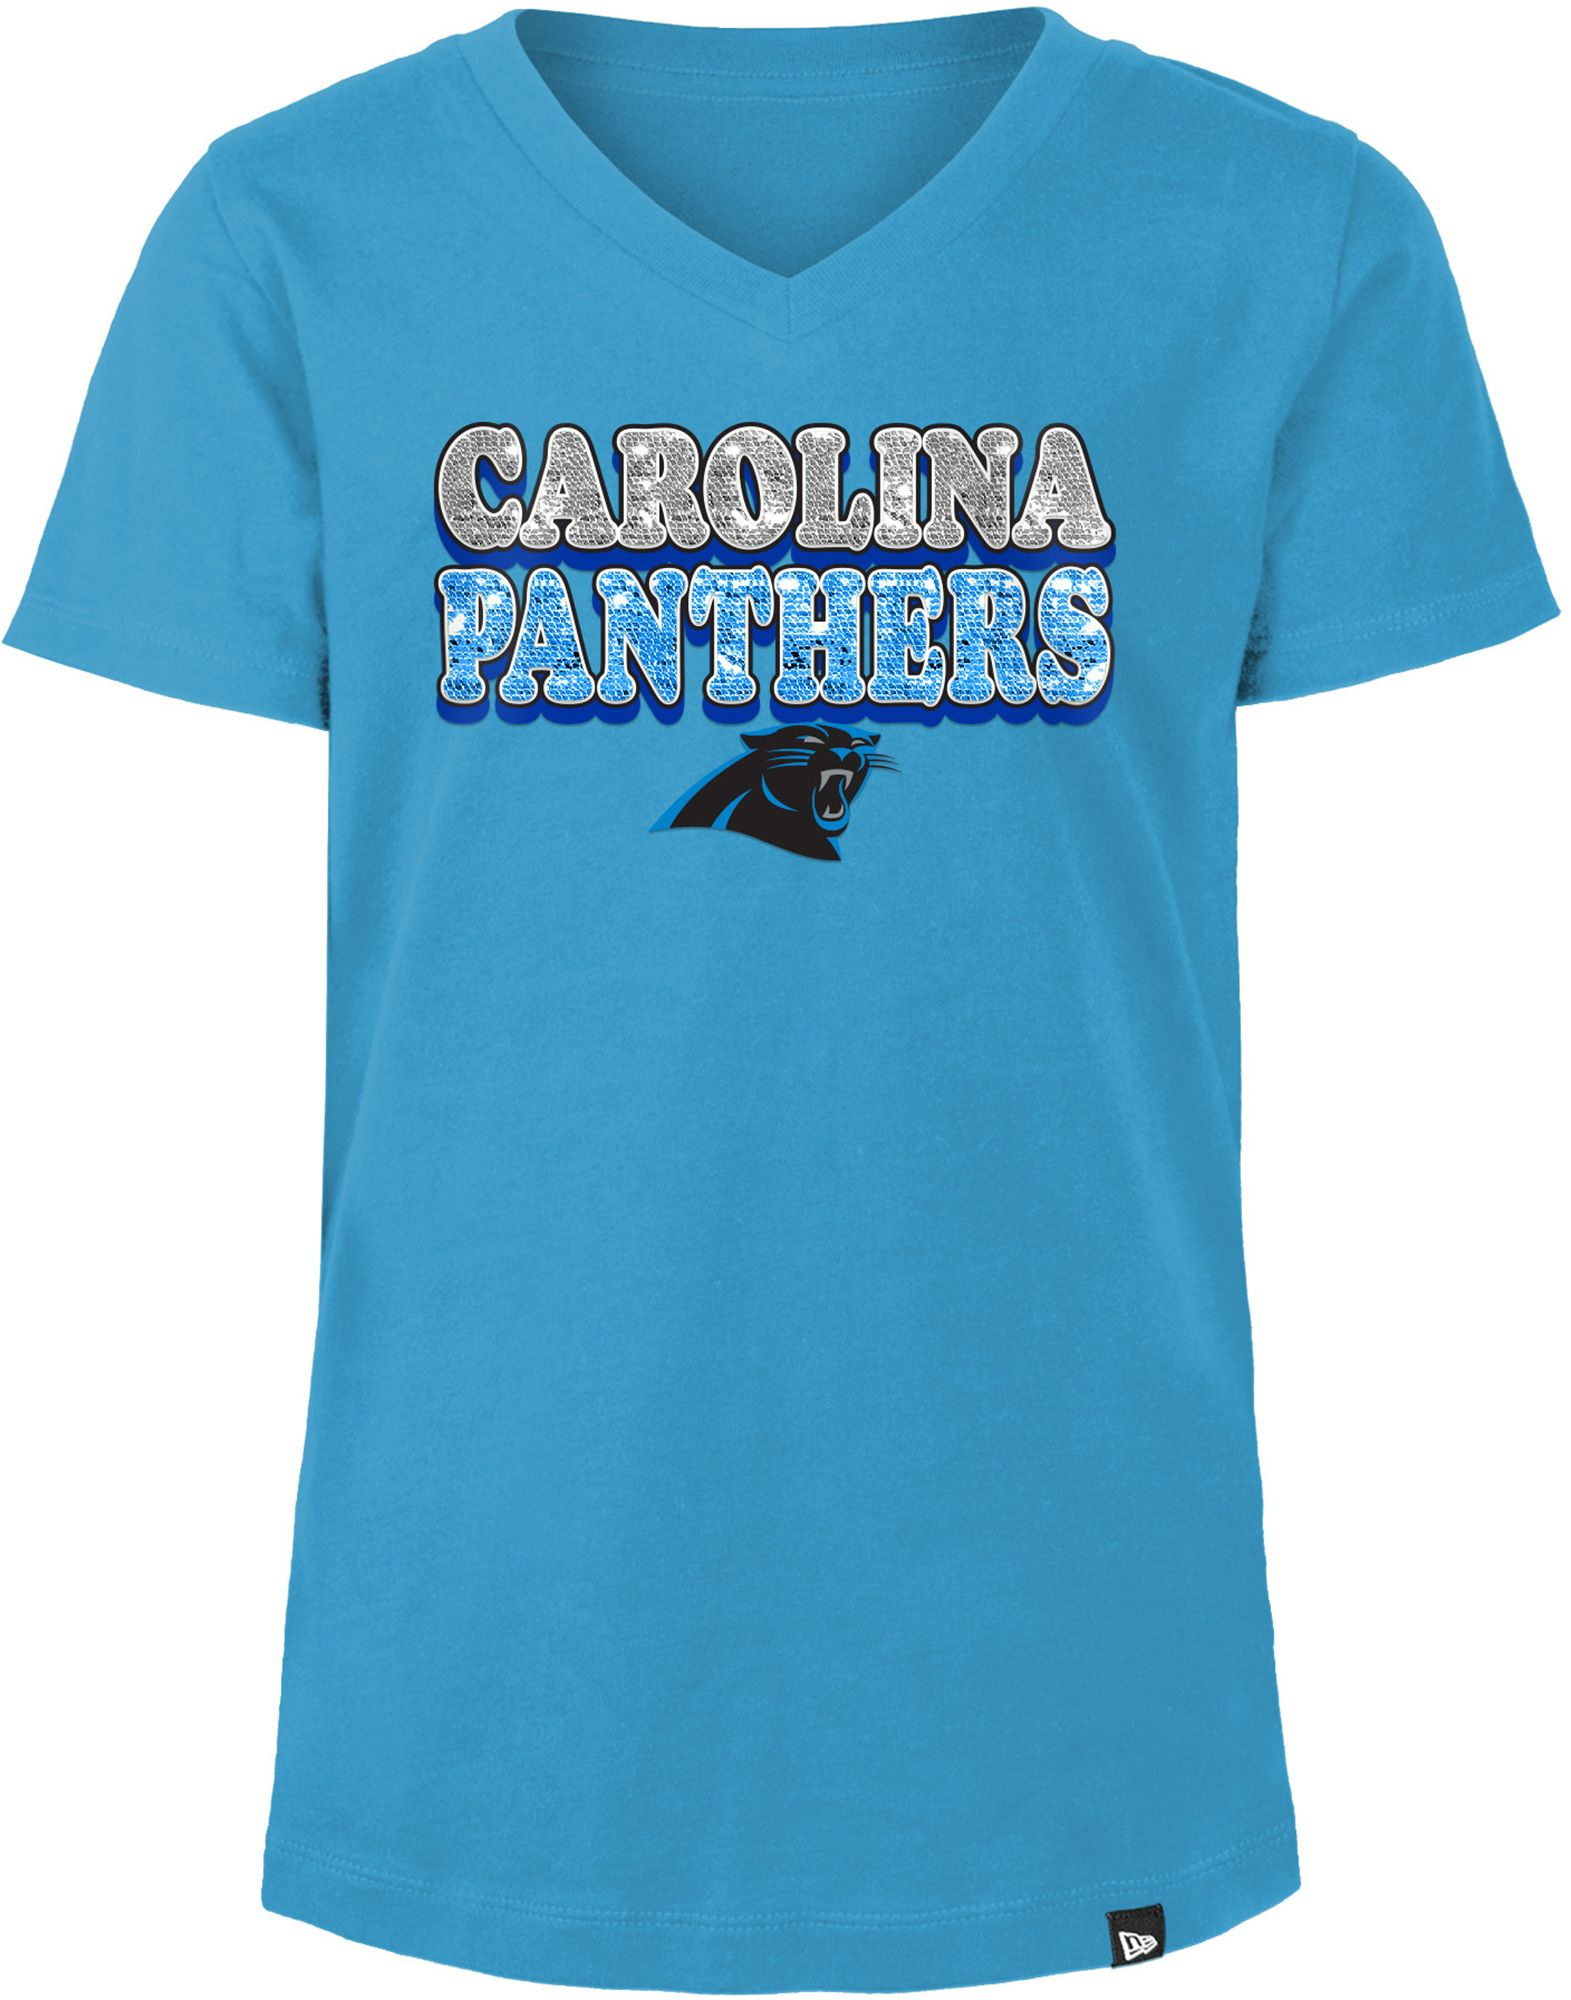 New Era Girls' Carolina Panthers Sequins  T-Shirt, Size 7/8, Blue